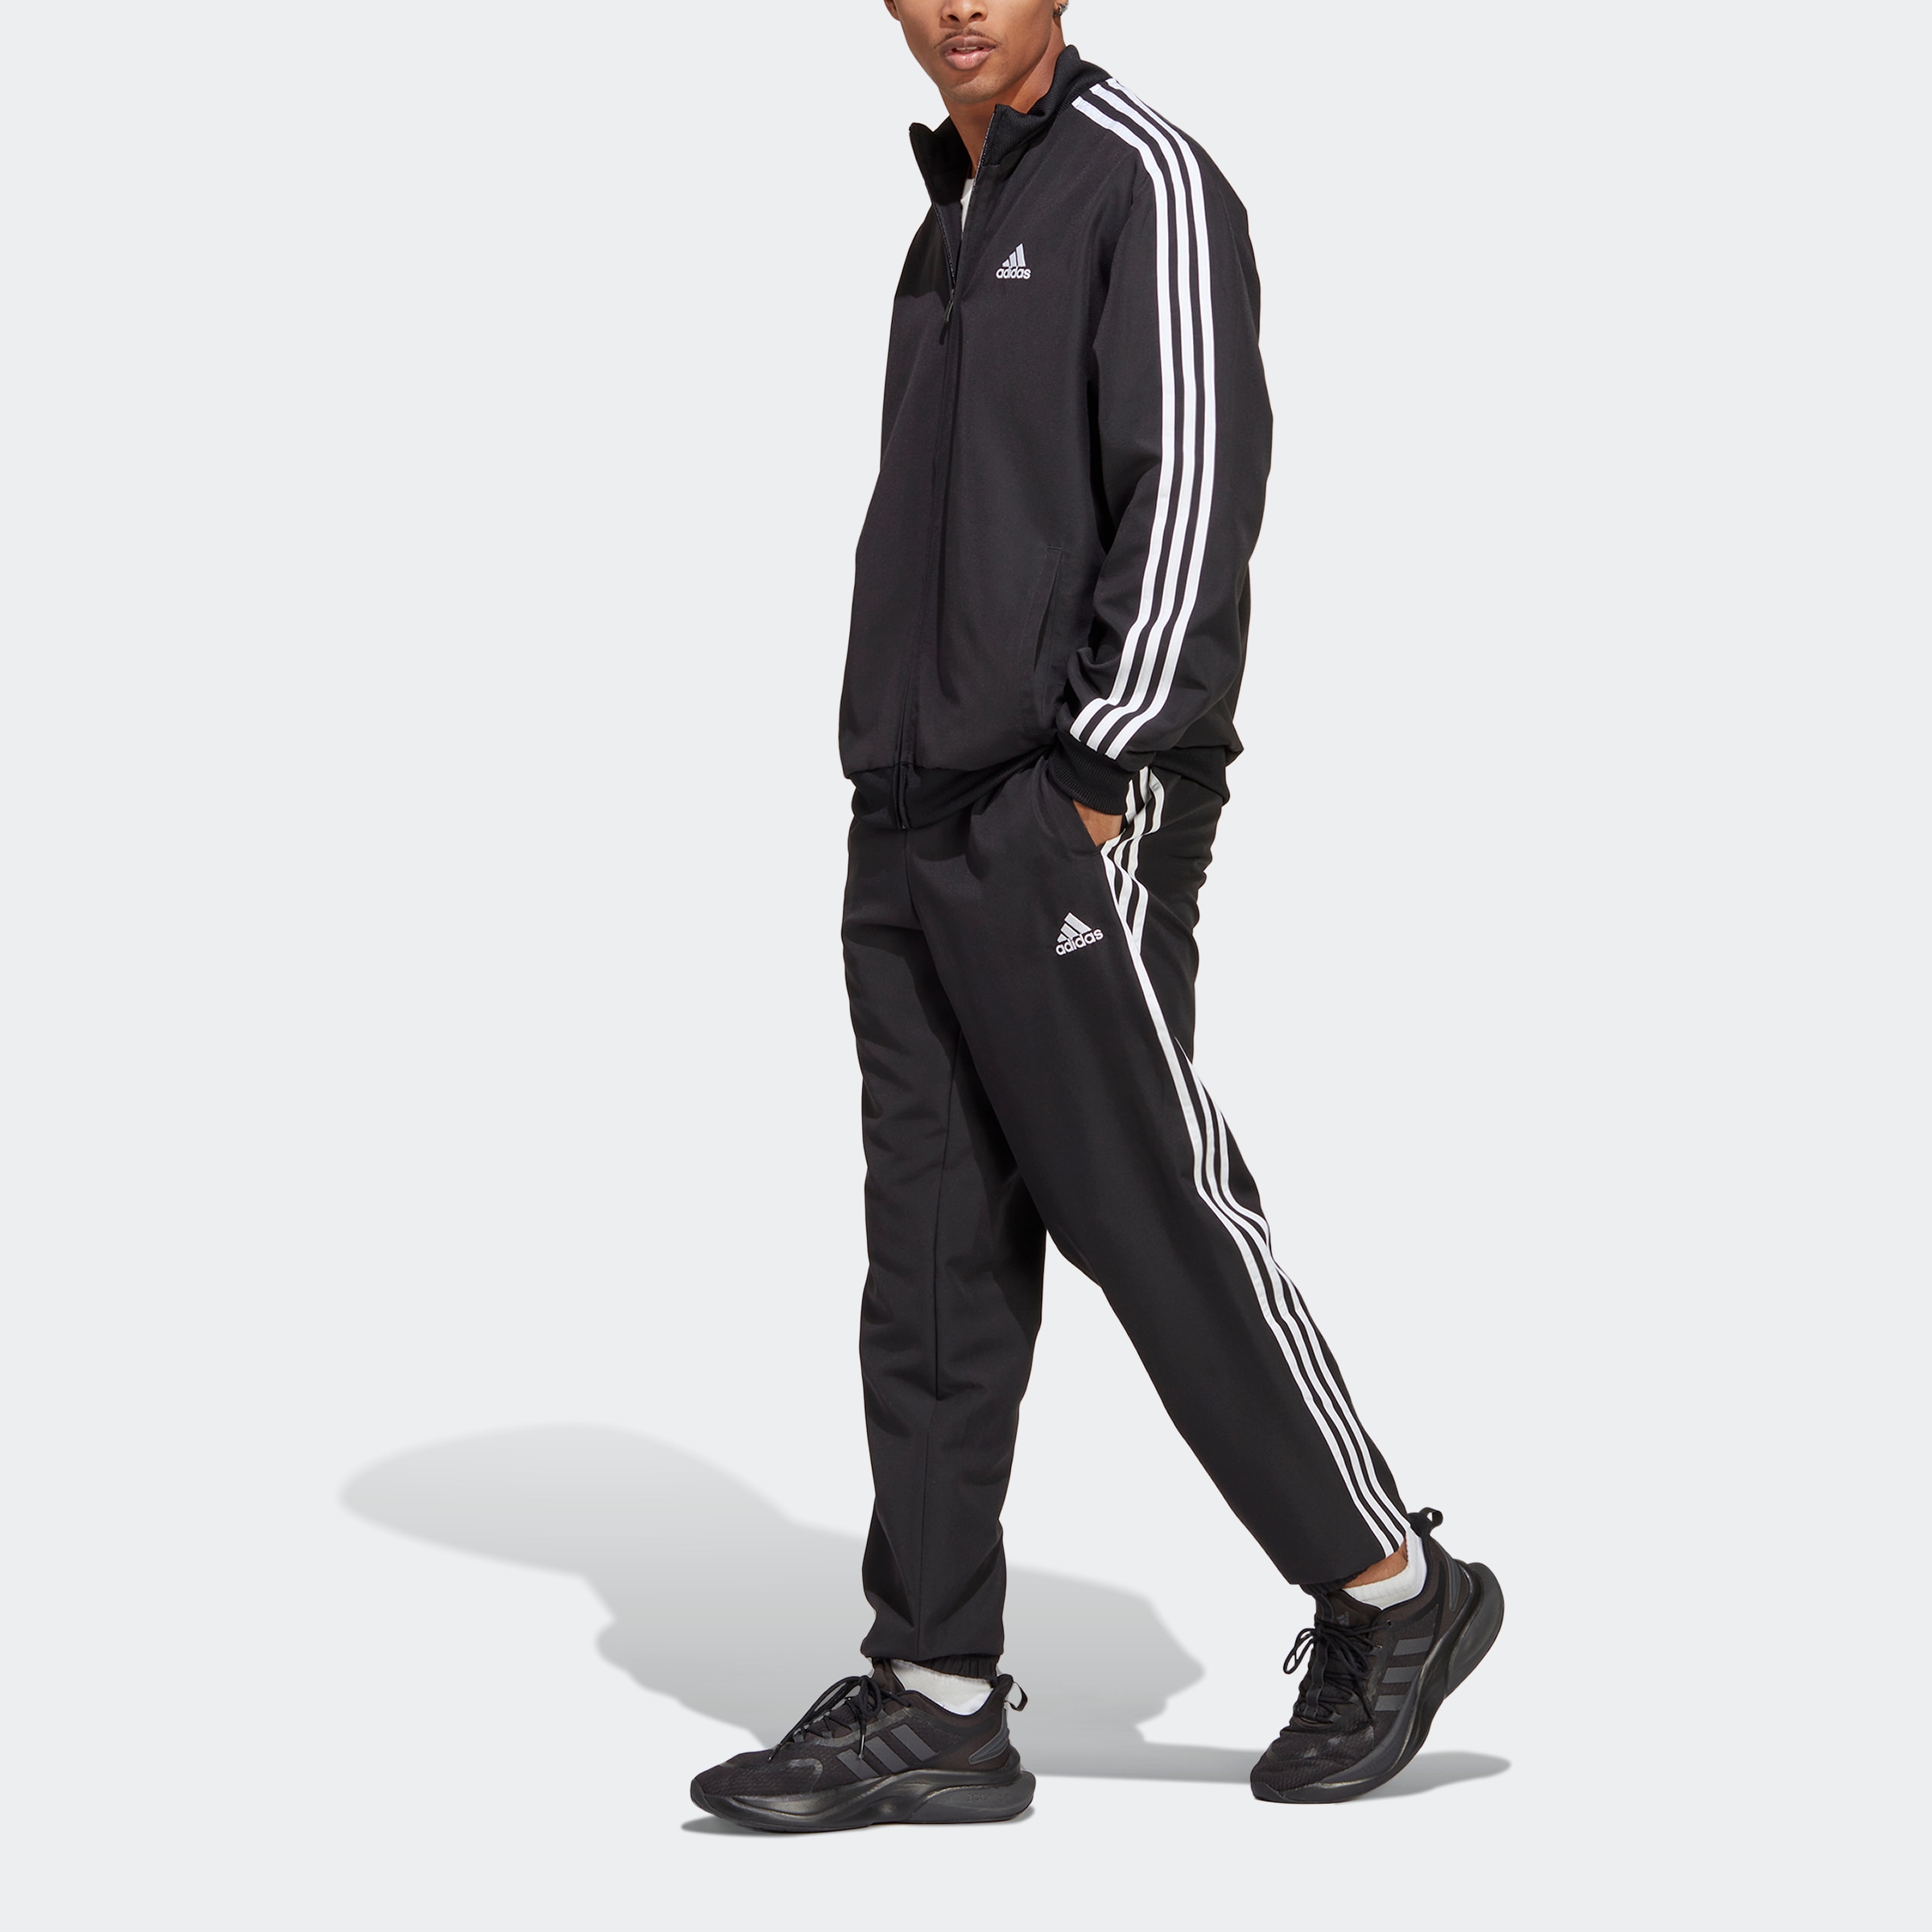 Nauwkeurig Geslaagd Implicaties Adidas-Trainingsanzug-Herren online kaufen ▻ OTTOVERSAND.at